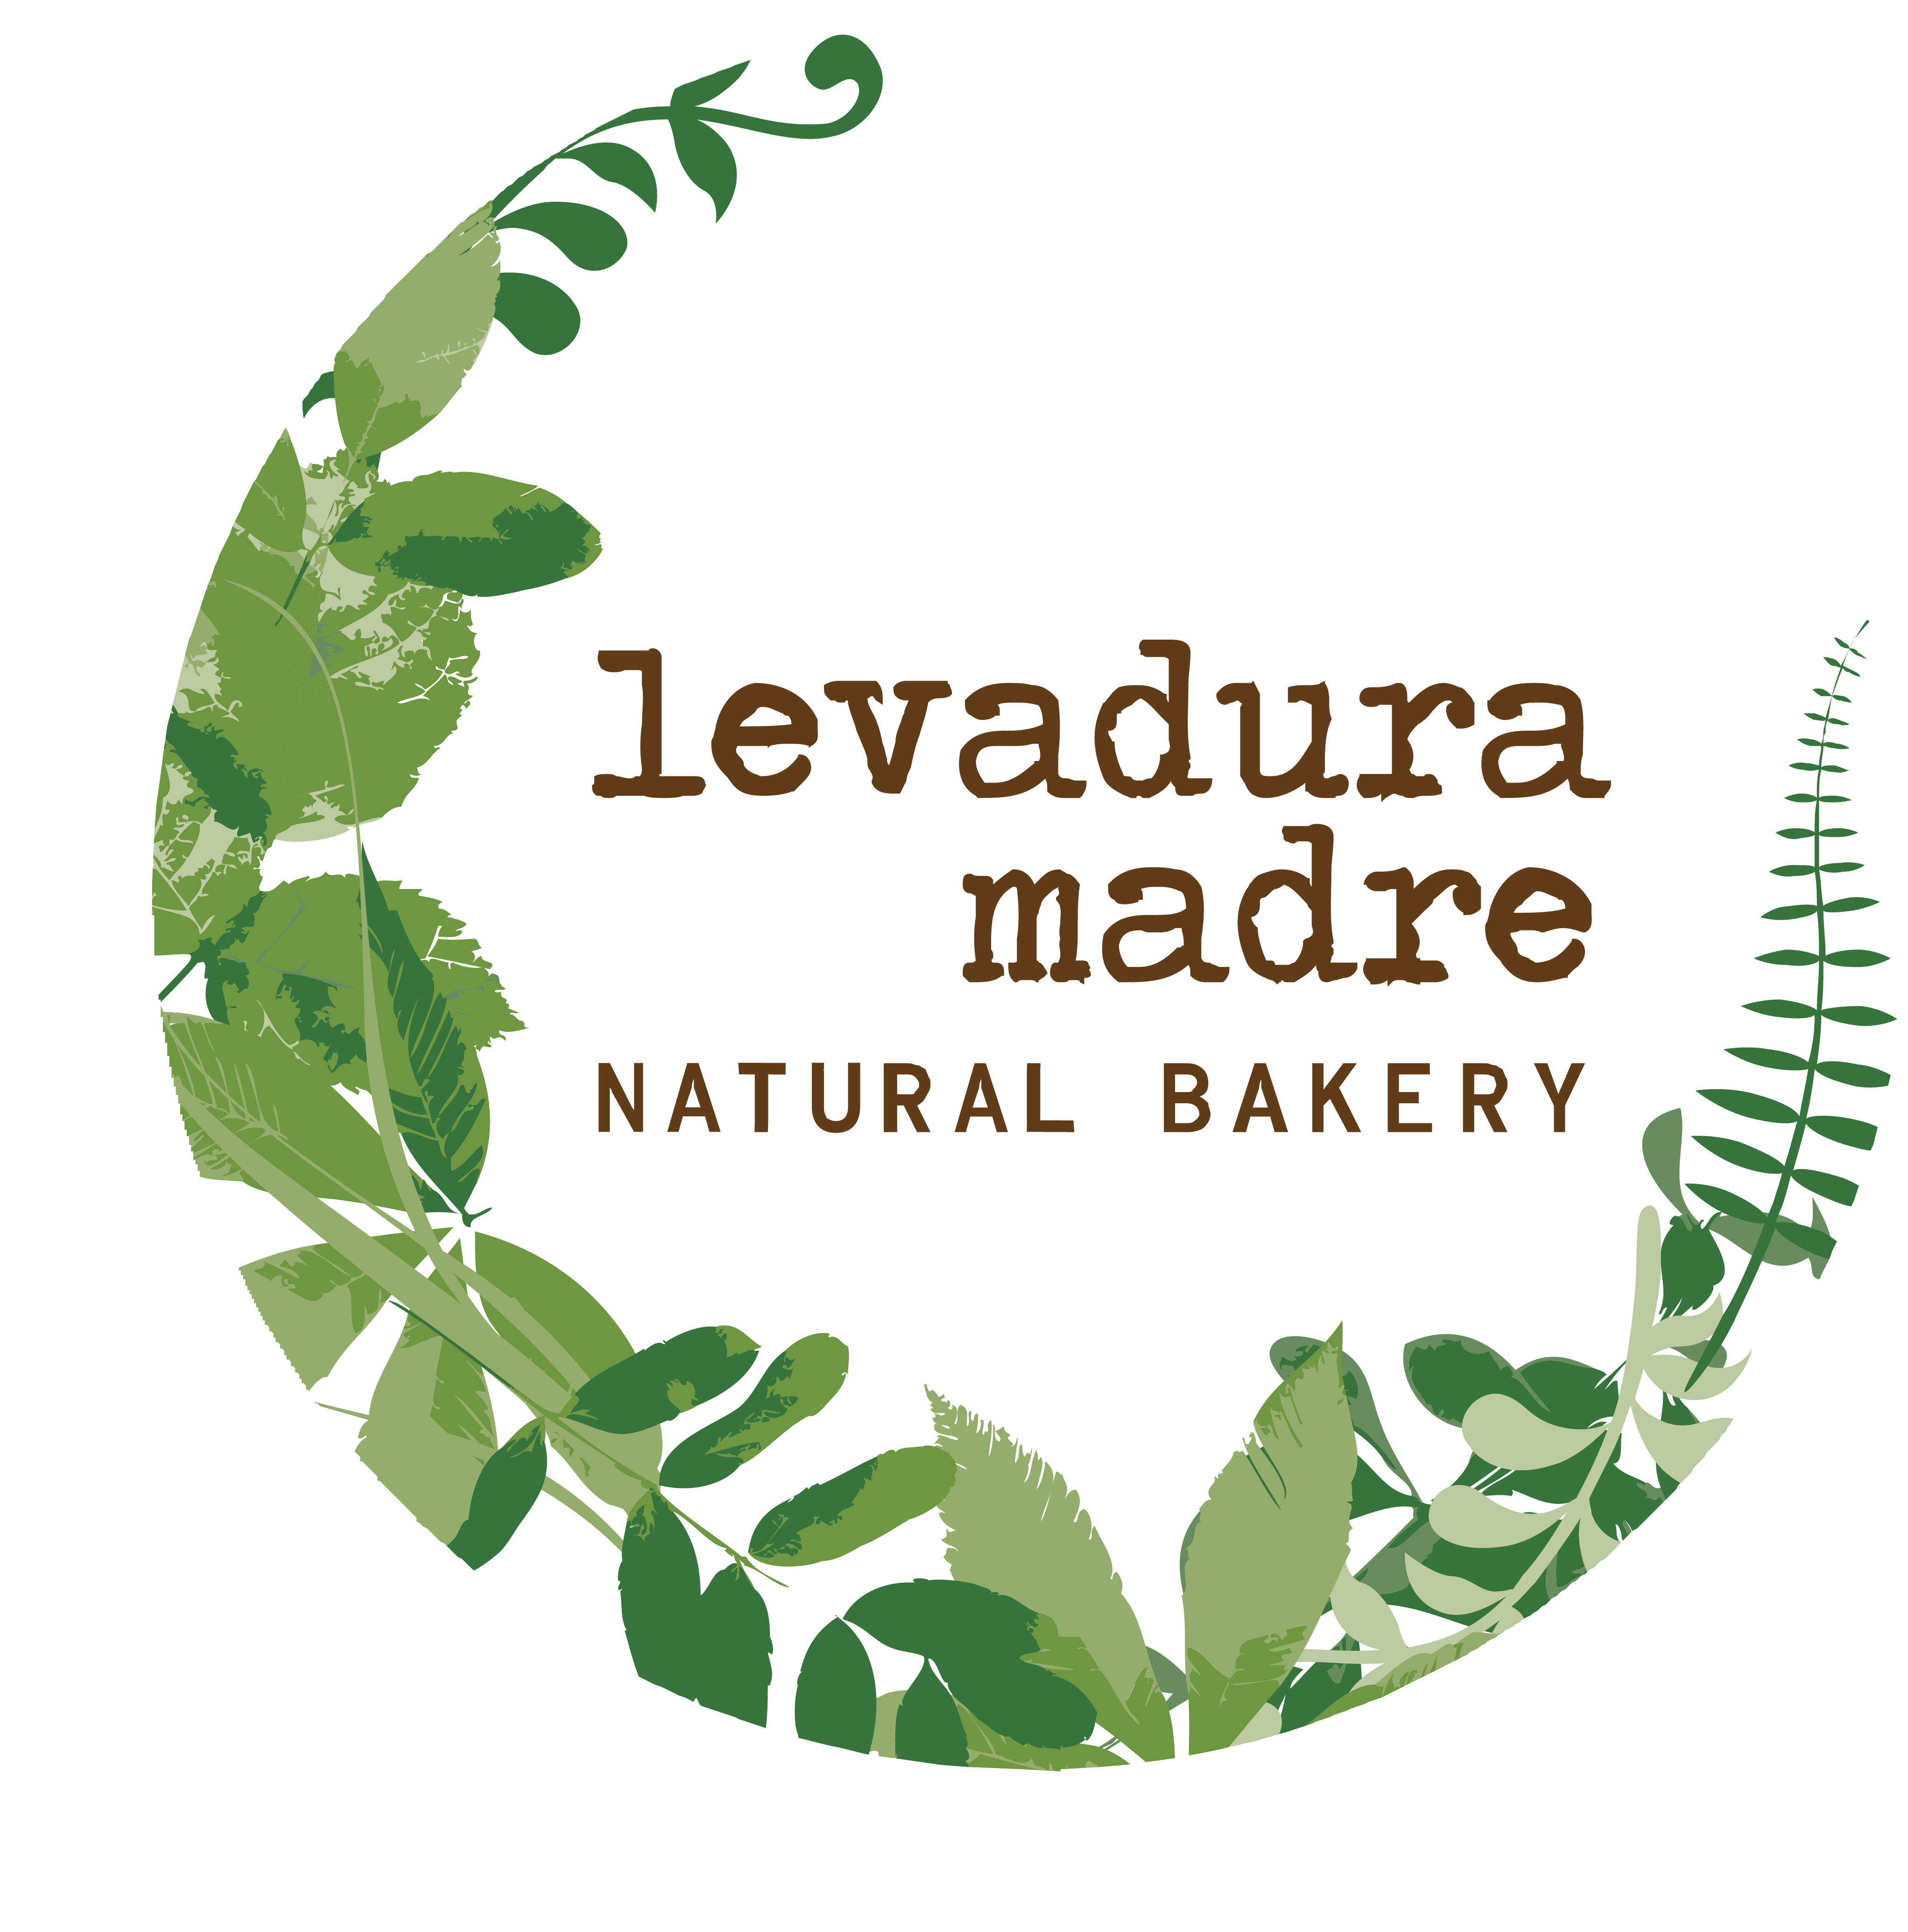 Levaduramadre - Natural Bakery